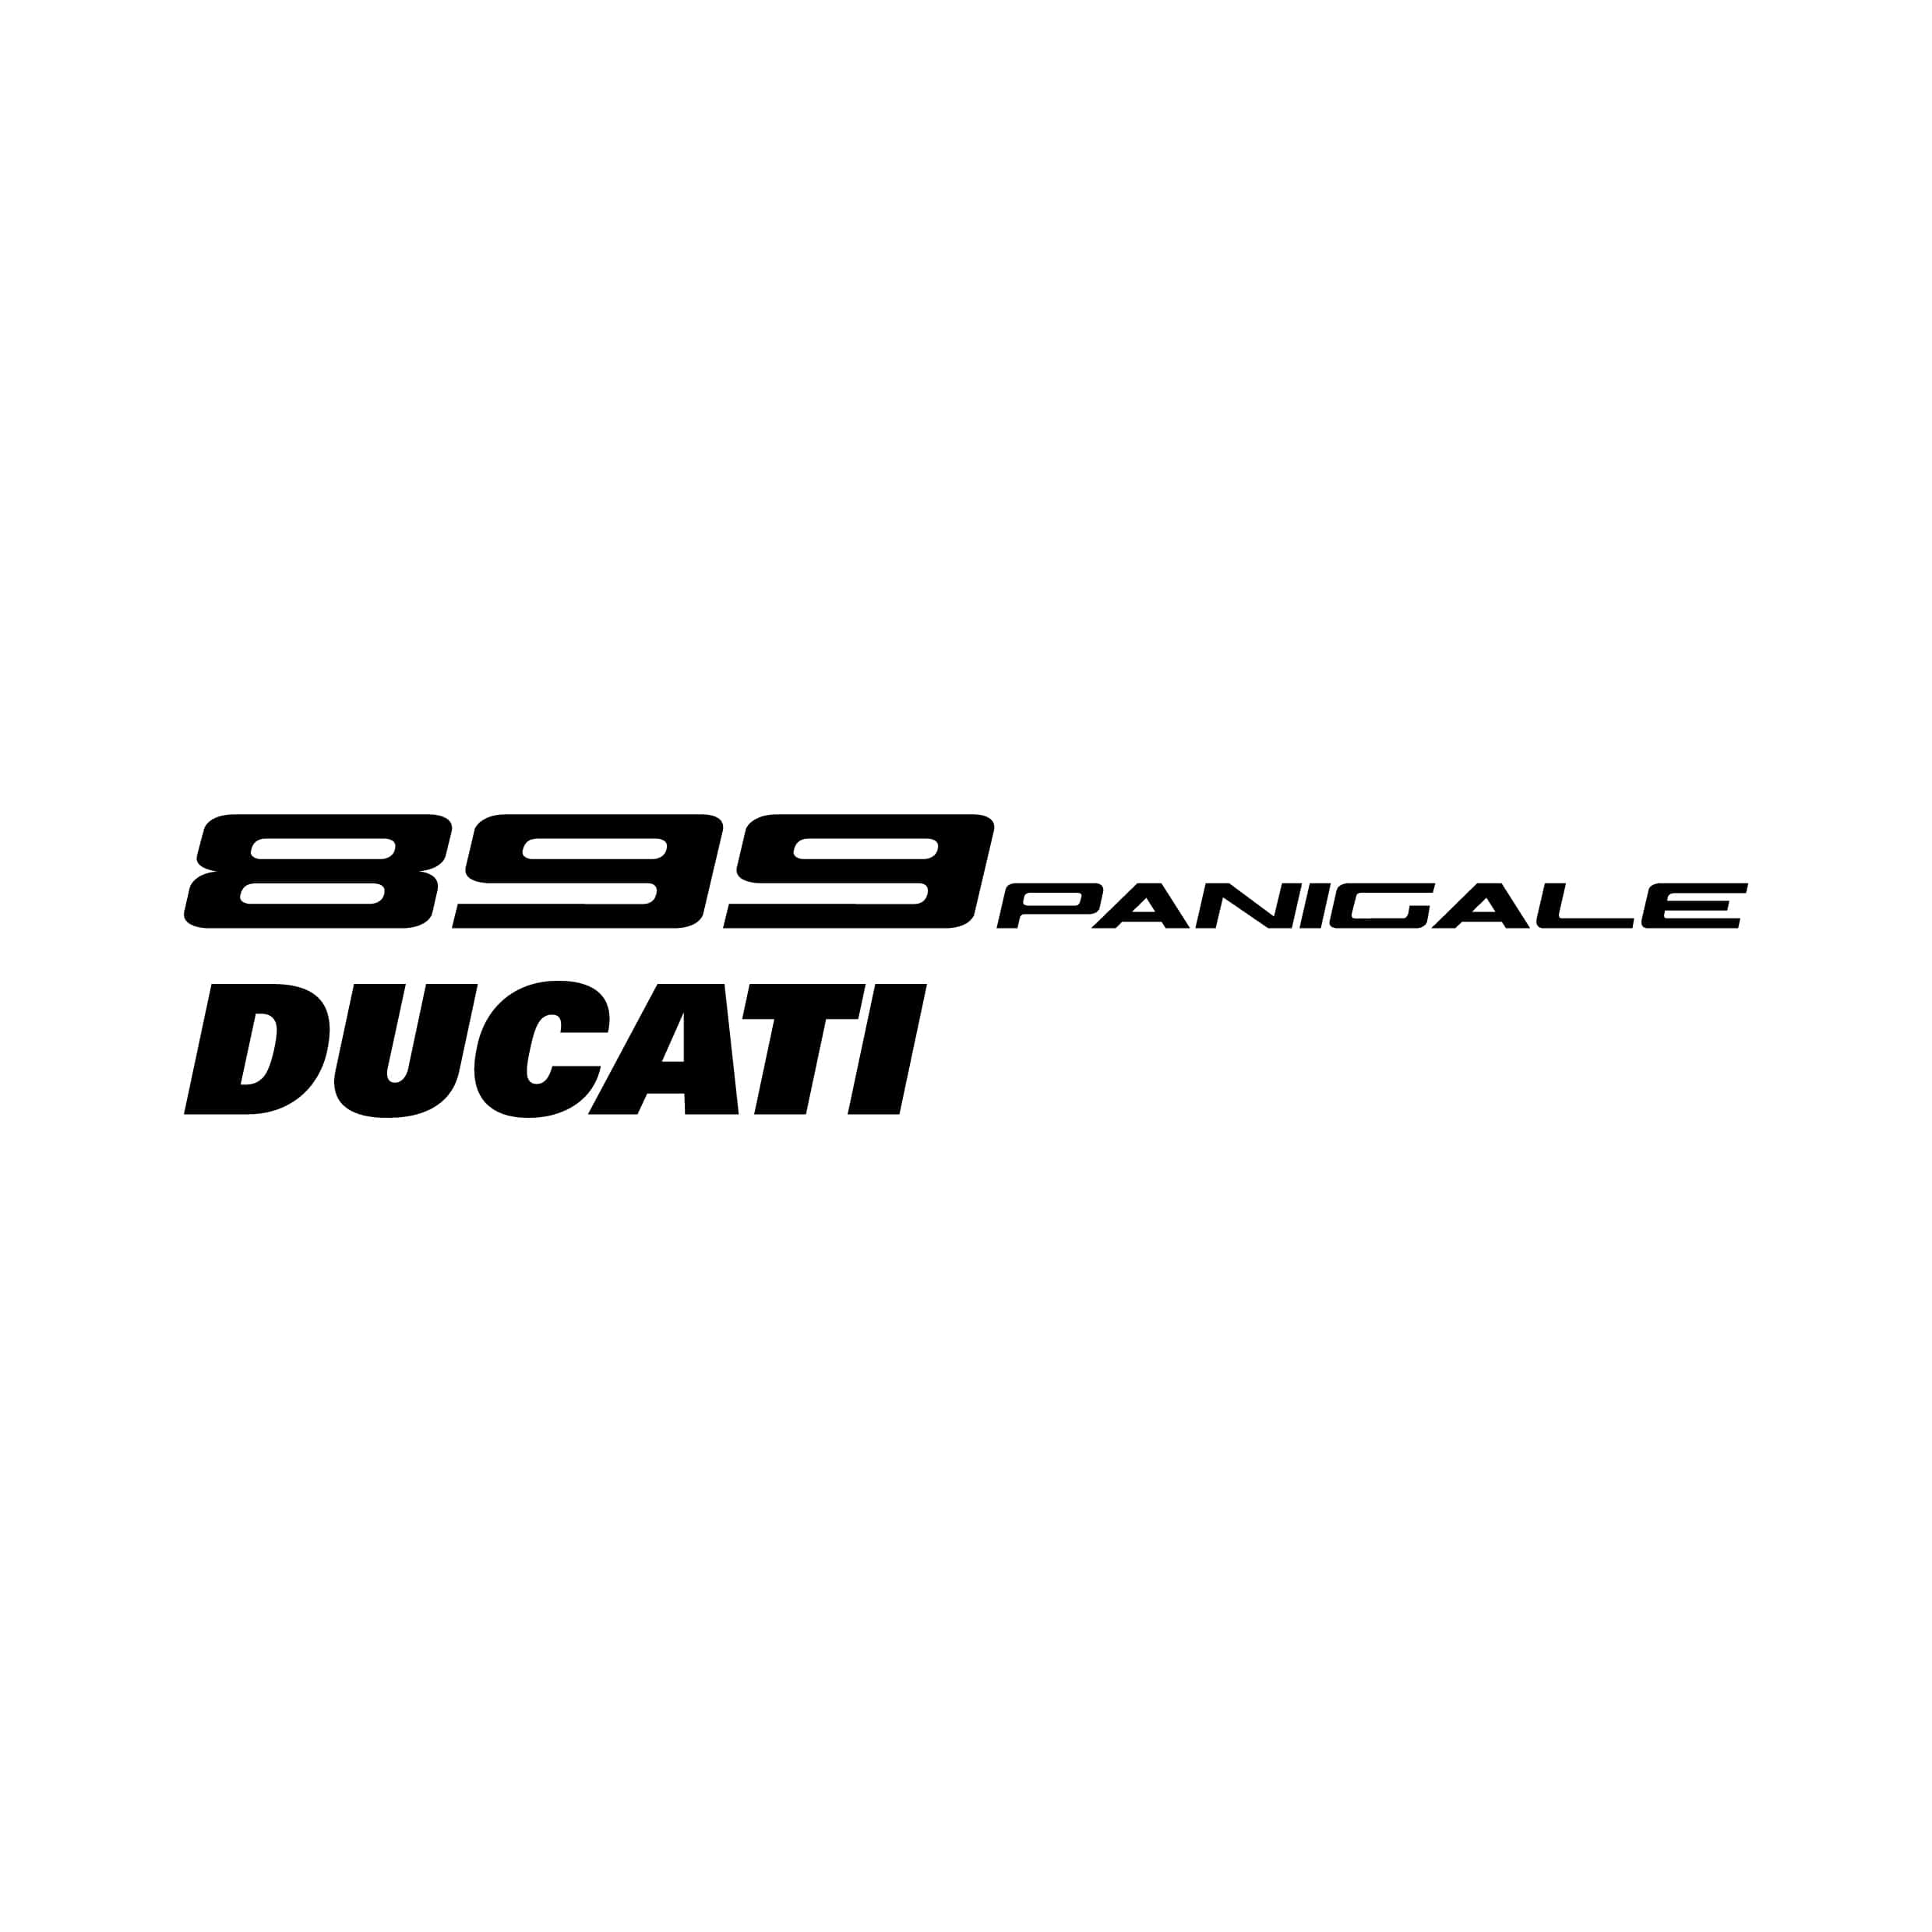 stickers-899-panigale-ducati-ref9-autocollant-moto-sticker-deux-roue-autocollants-decals-sponsors-tuning-sport-logo-bike-scooter-min